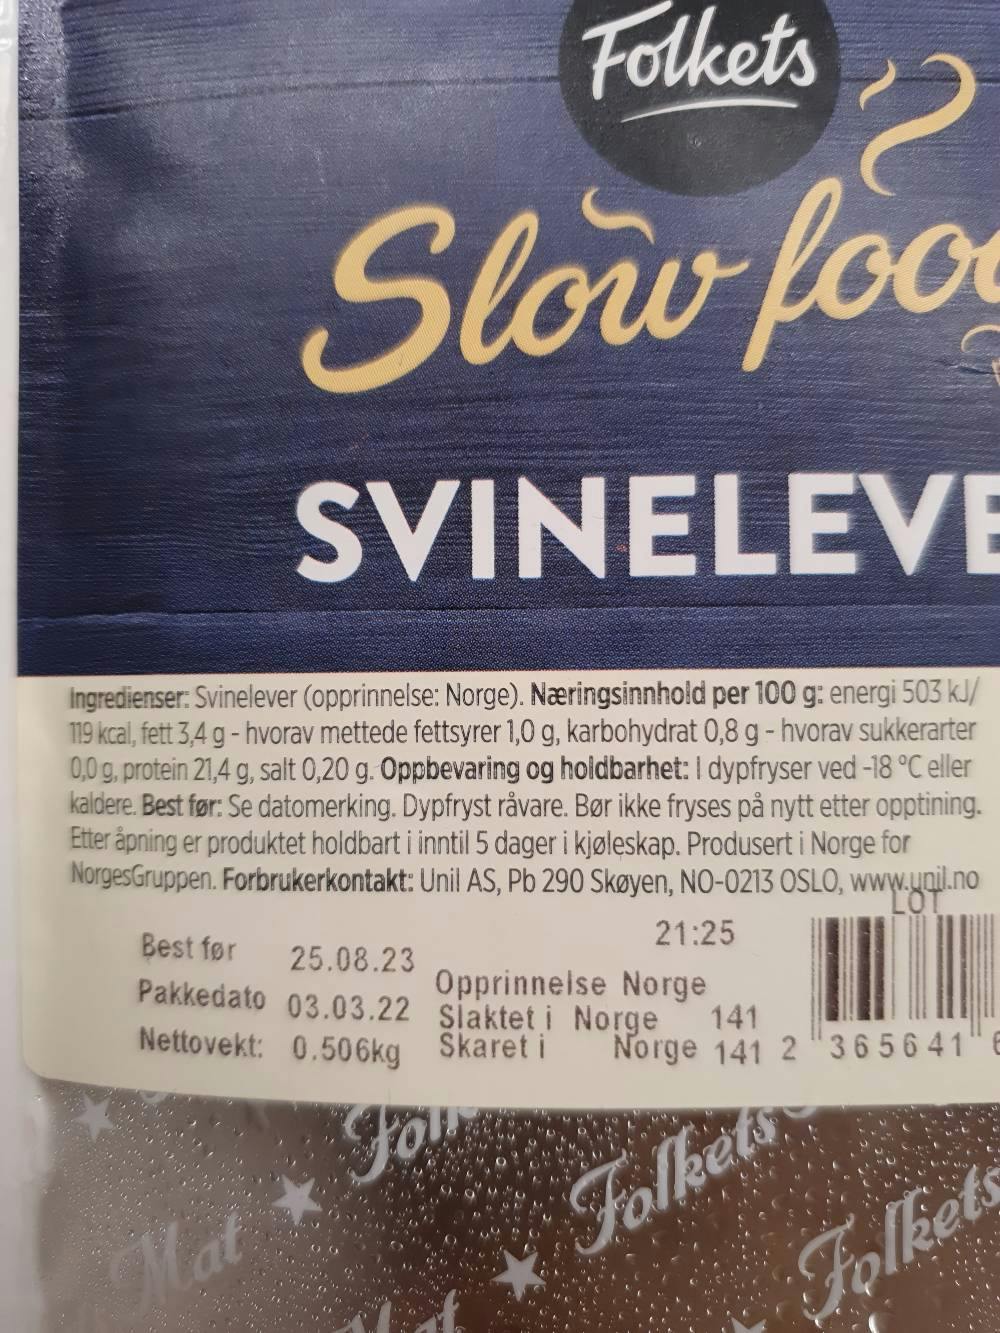 Ingrediensliste - Slow food Svinelever, Folkets